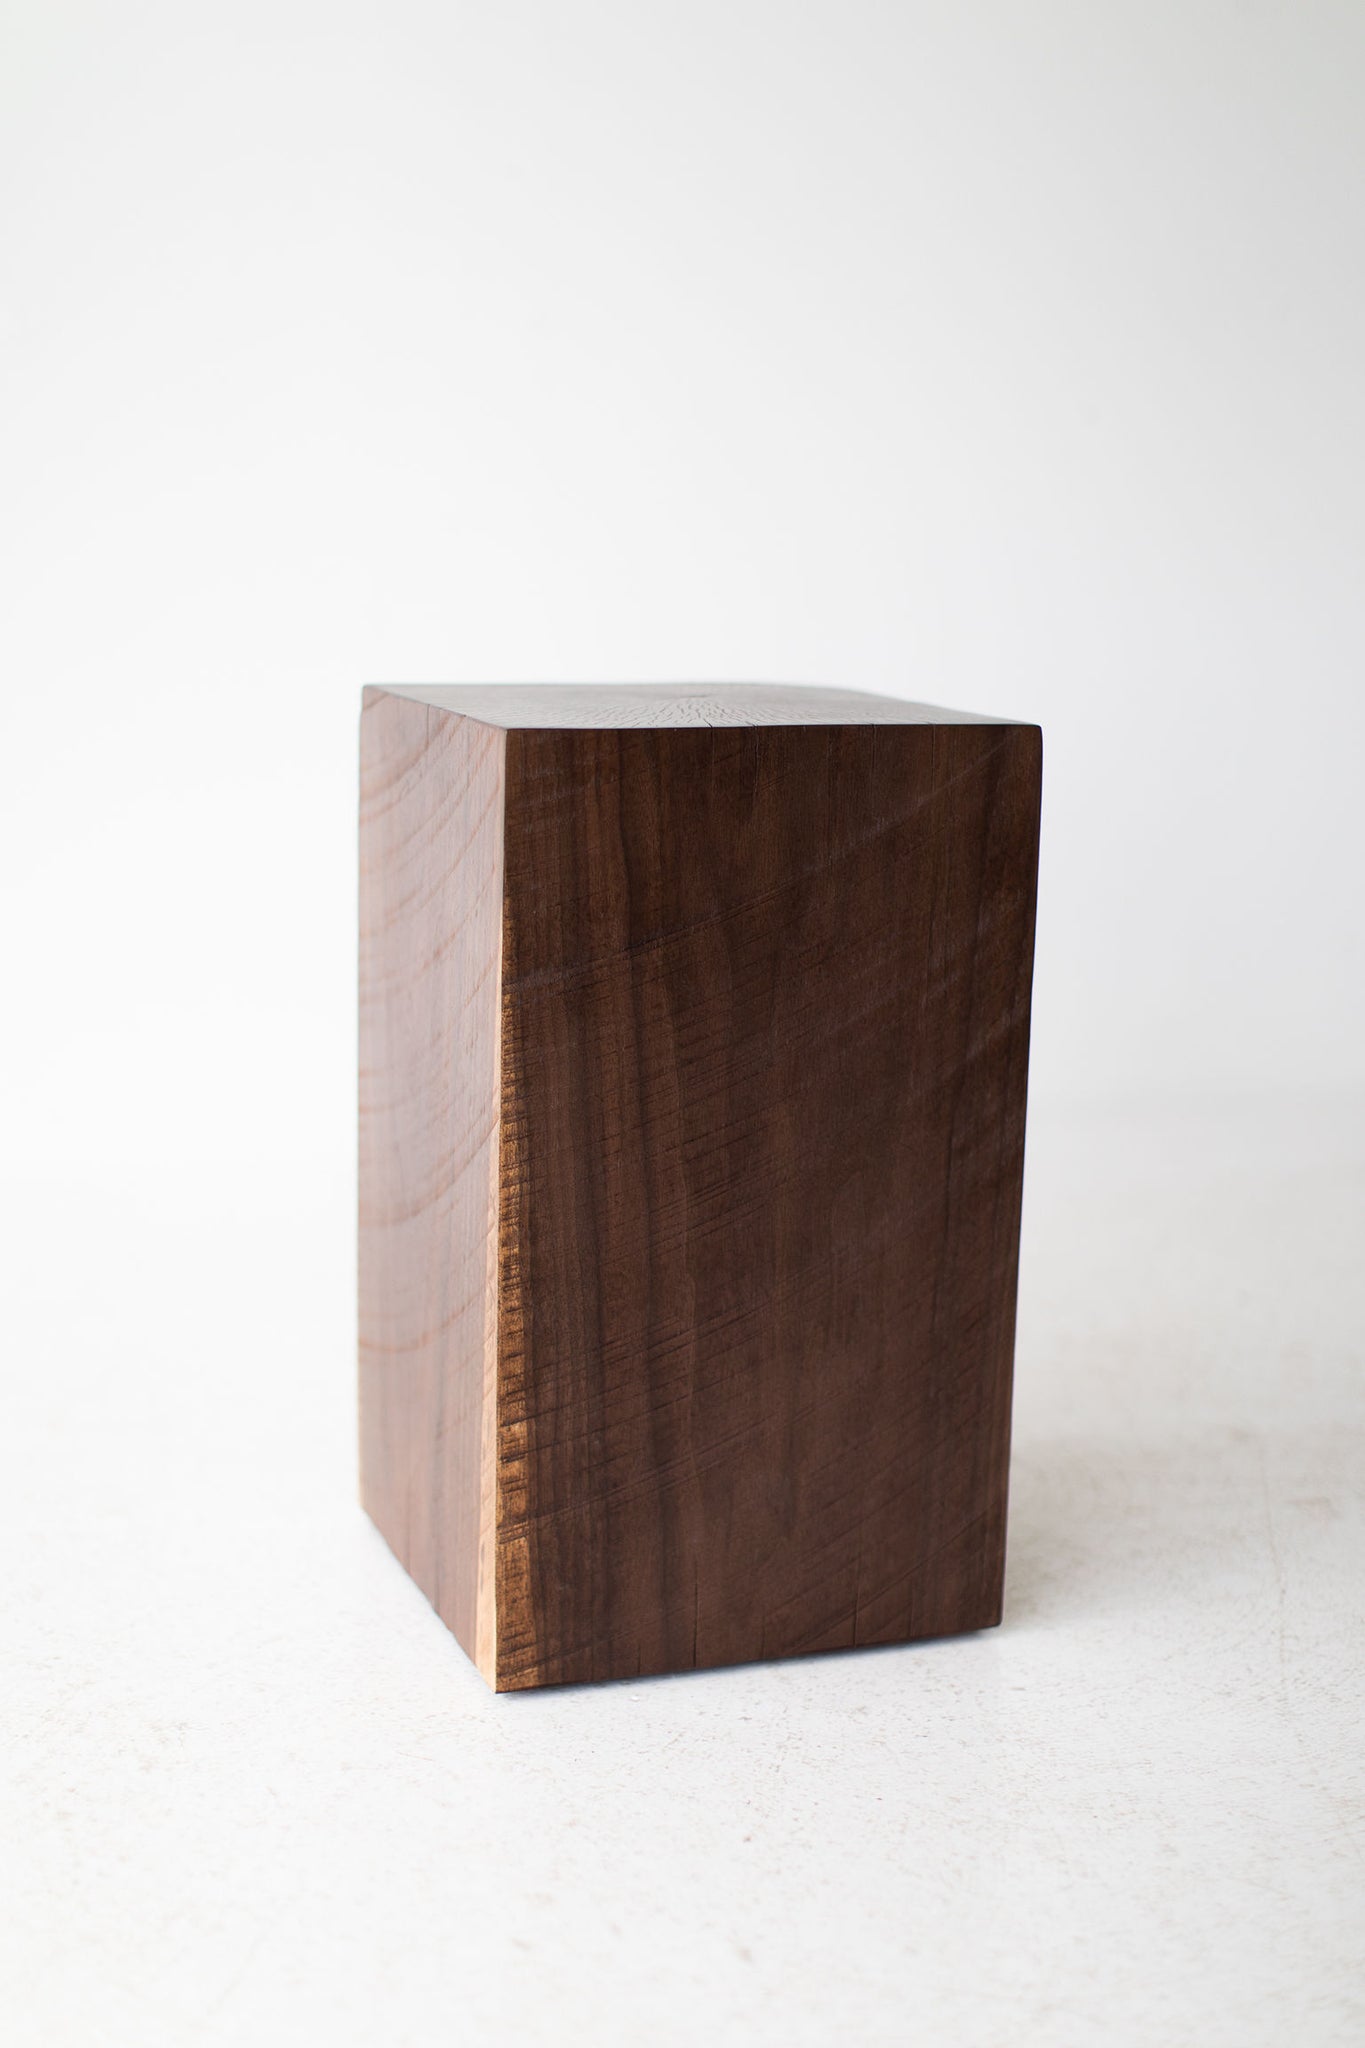 Modern Wood Side Tables Walnut 0621, Image 03